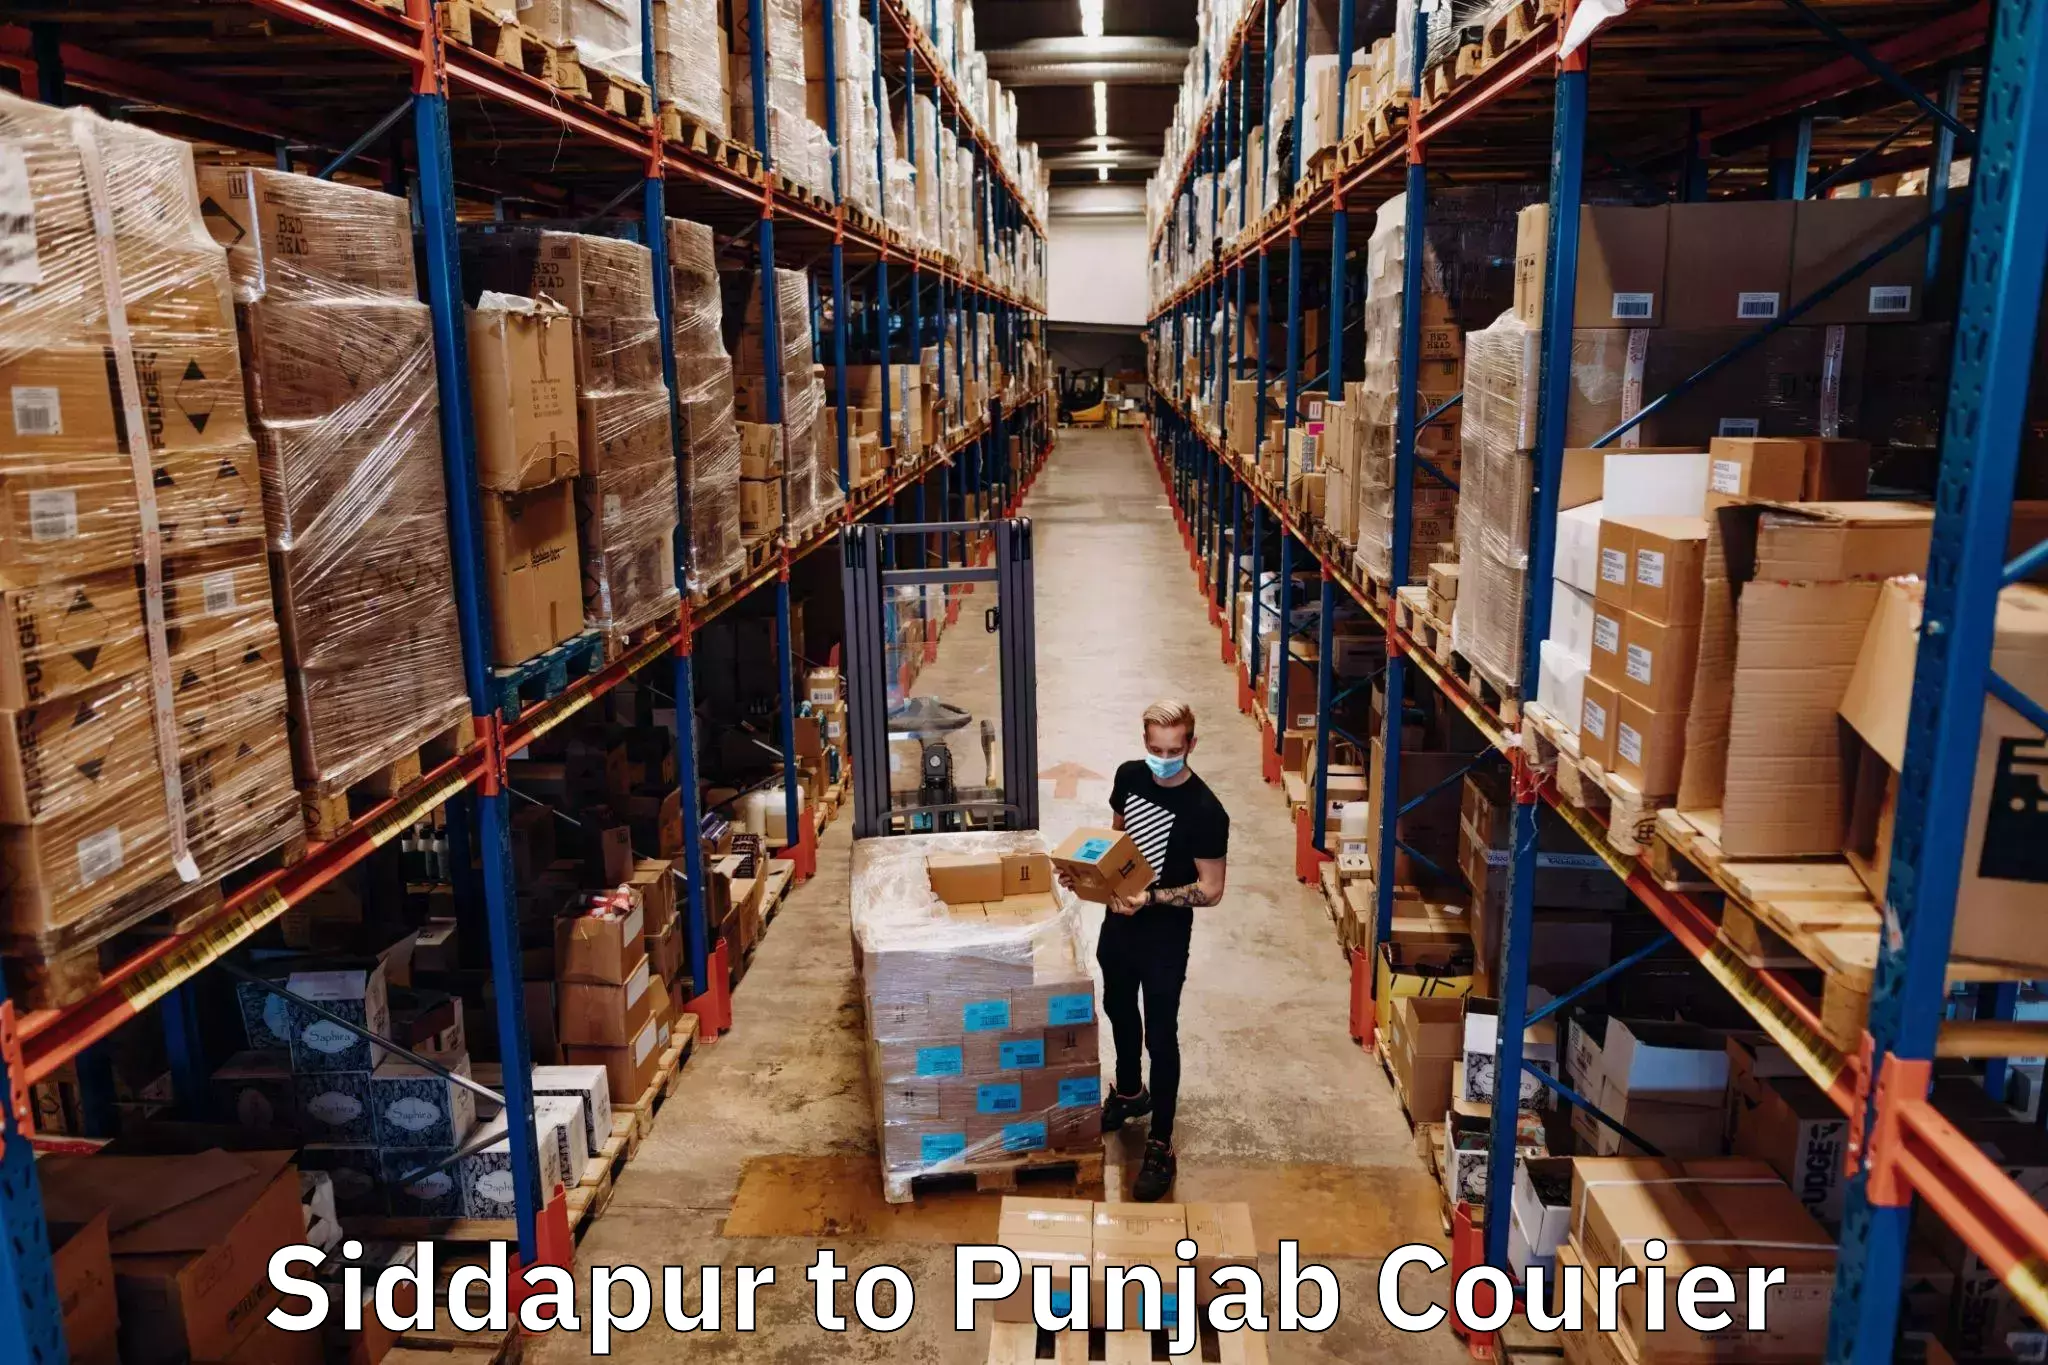 Courier service comparison Siddapur to Raikot